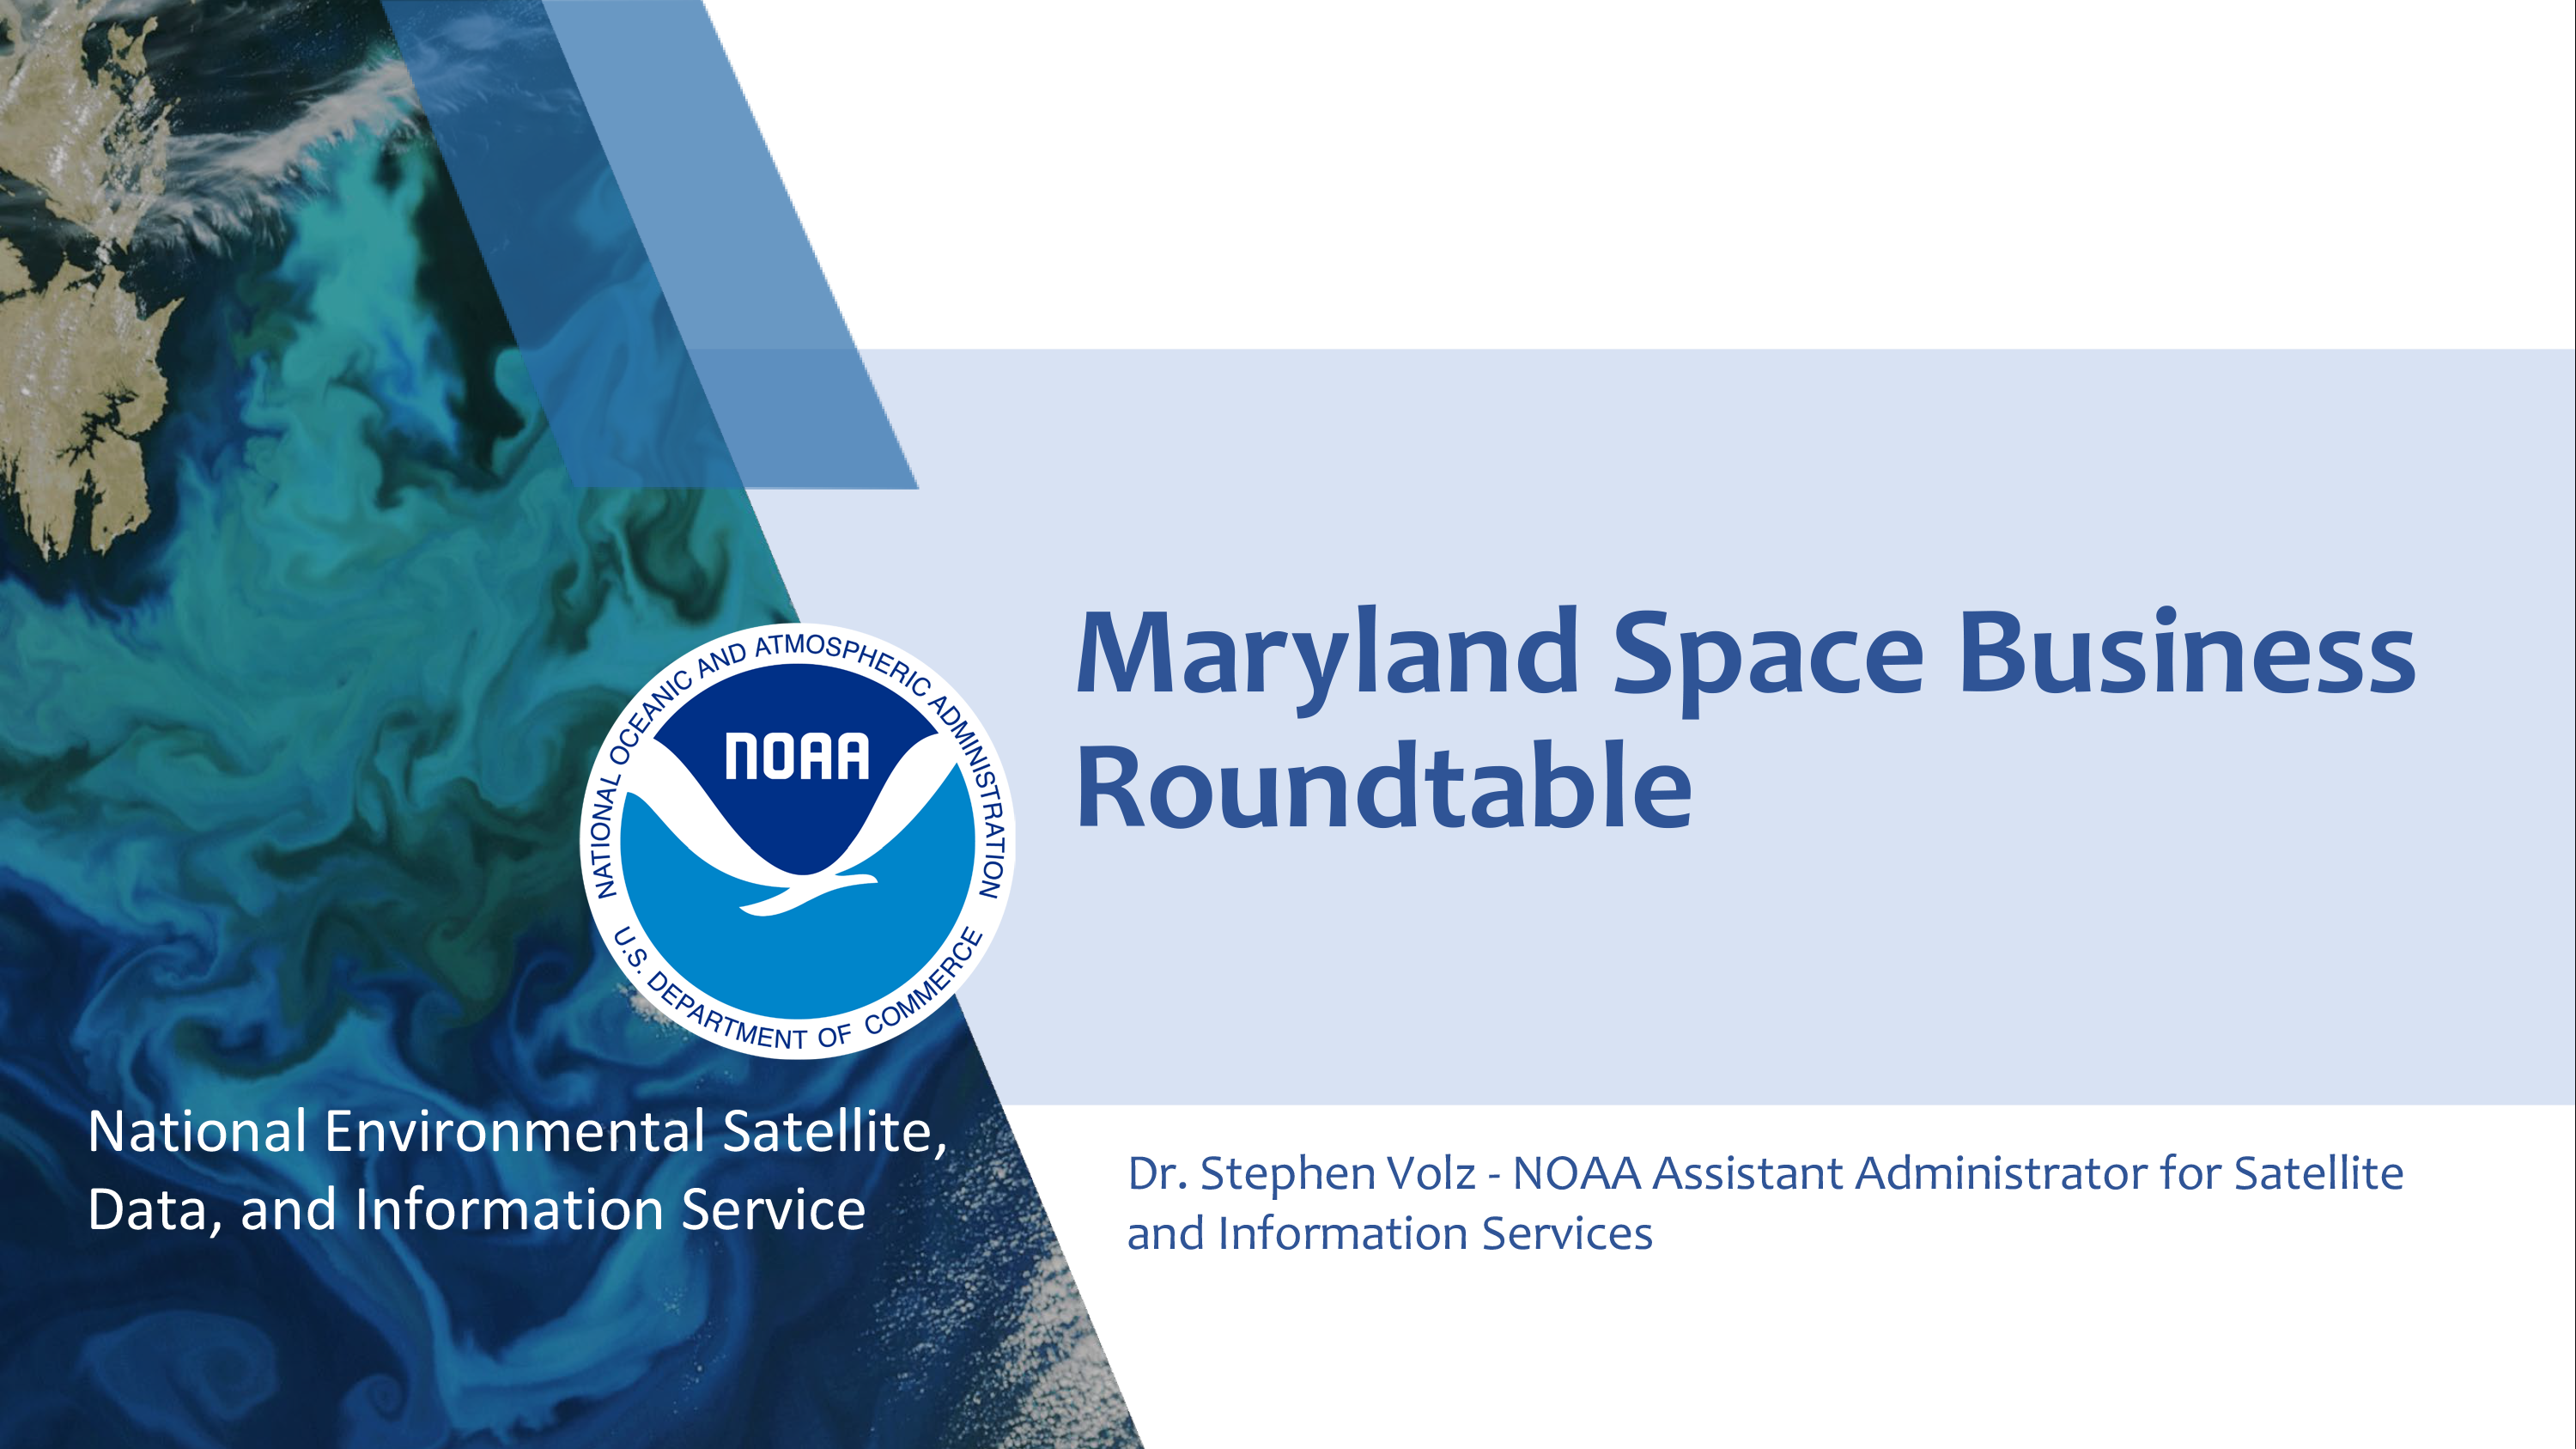 NOAA Satellite and Information Service